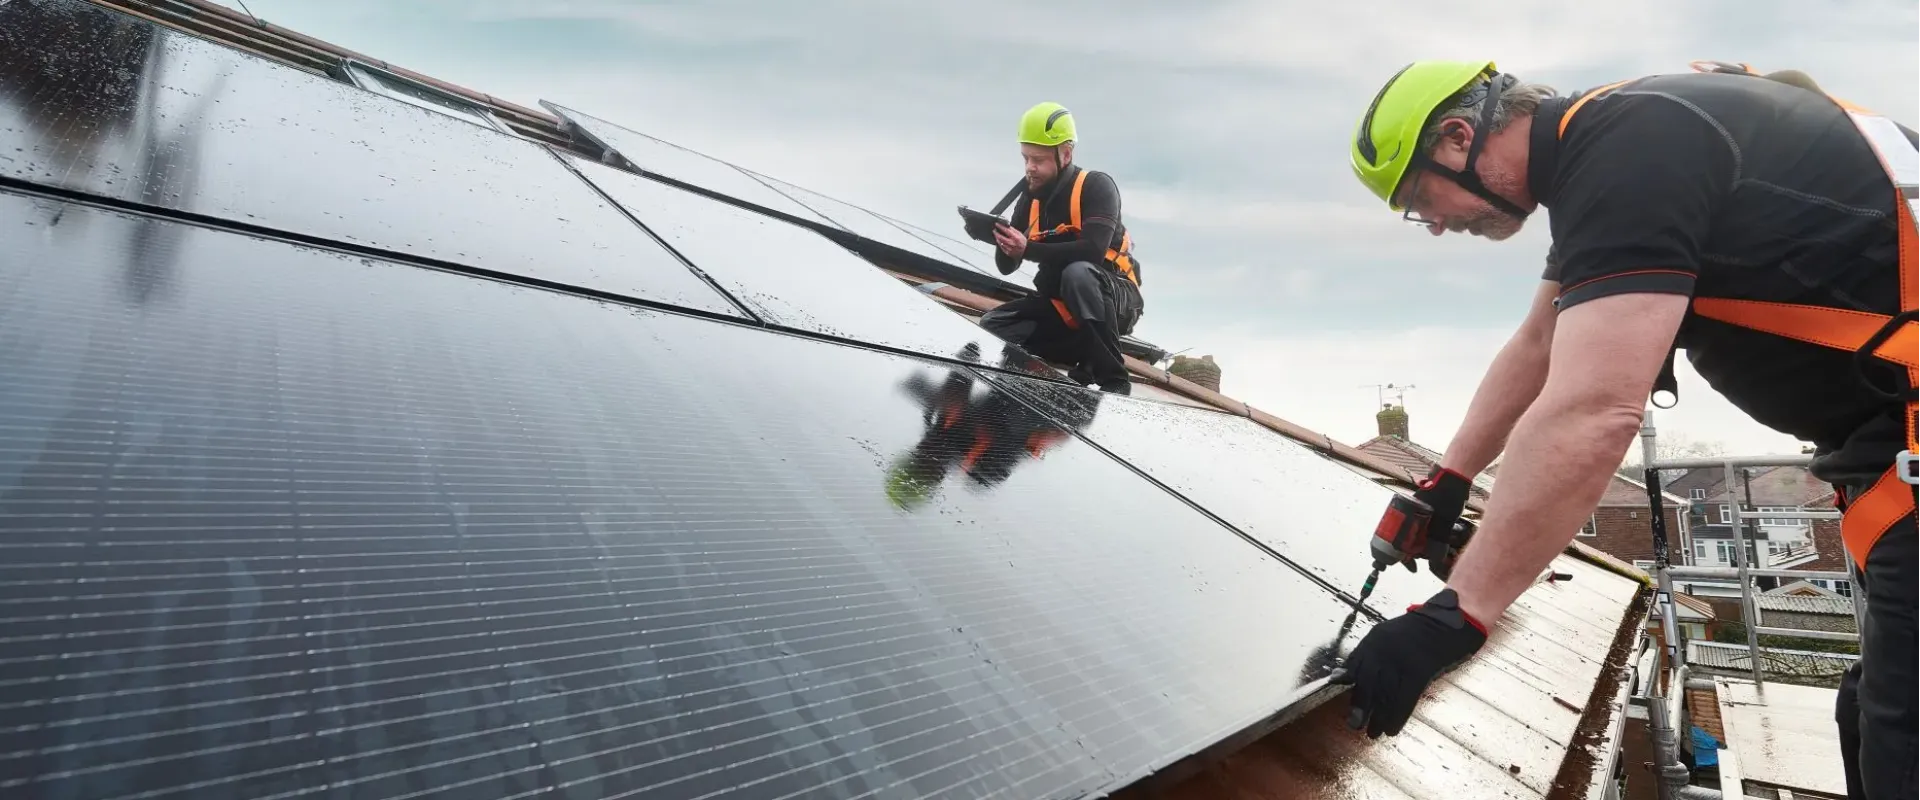 solar panel company uk